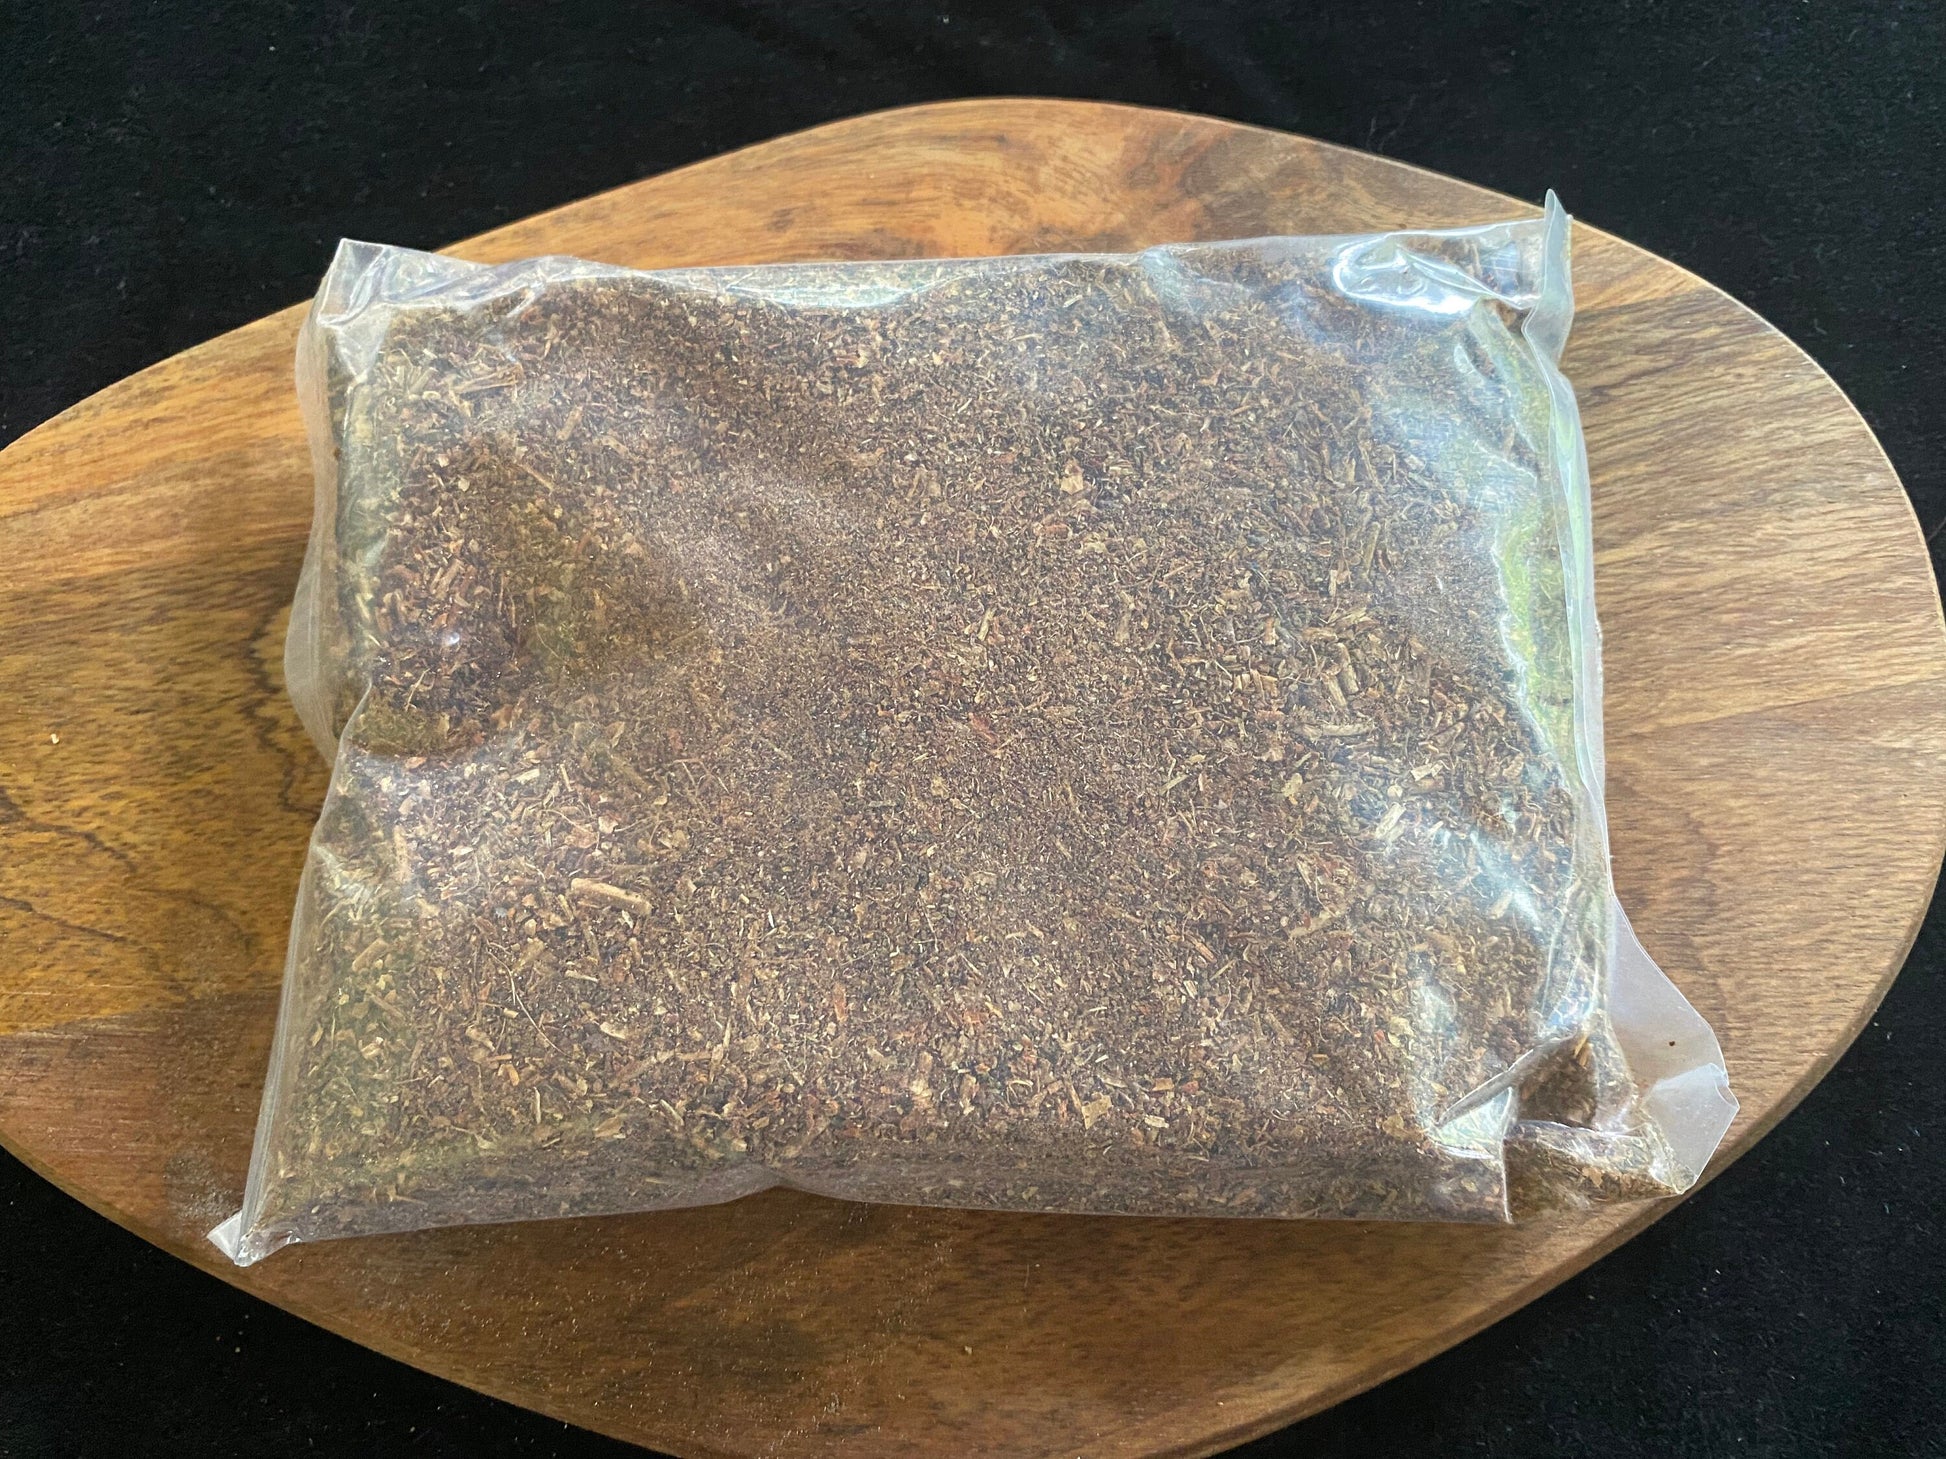 Lapchi Nesang Incense Powder | Tibetan Incense | 125 grams | The Sacred Incense of Lapchi Milarepa